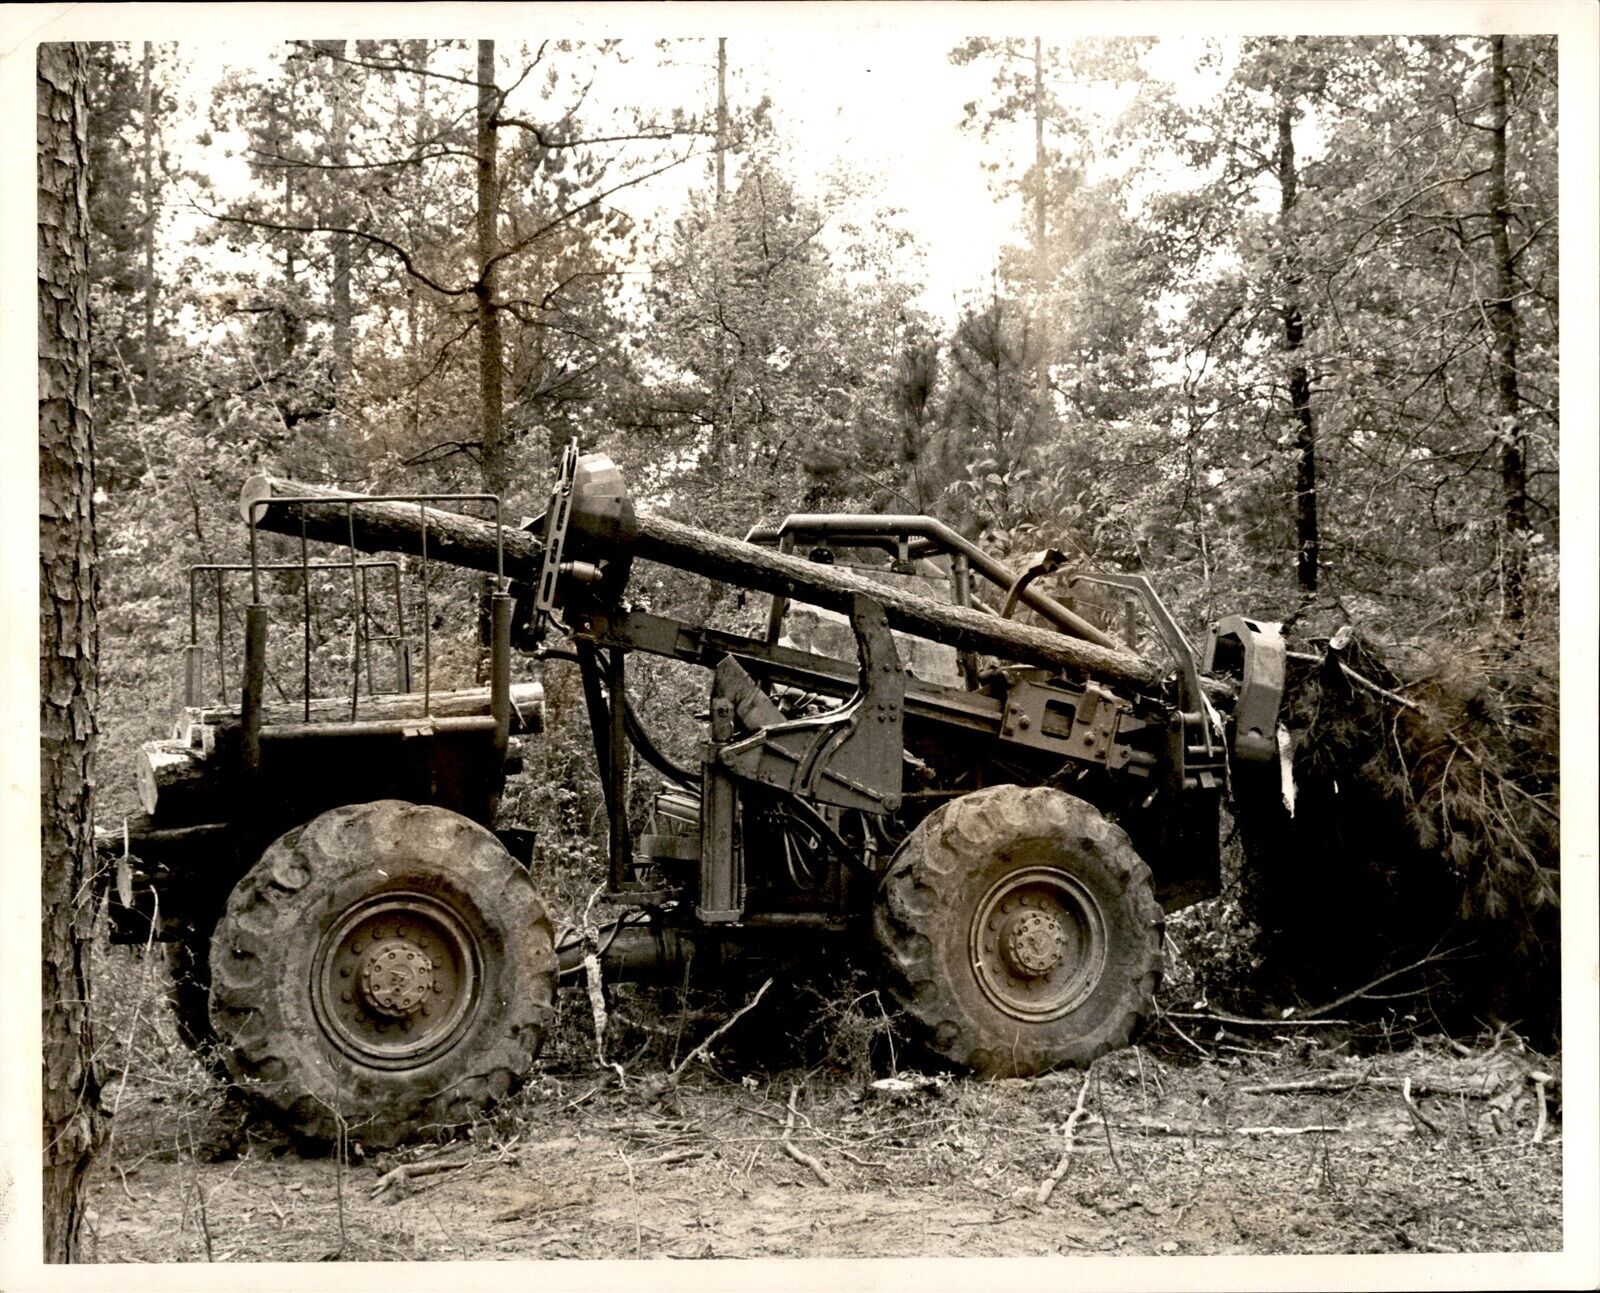 LG13 1942 Original Photo PULPWOOD INDUSTRY Vehicle Deforestation Hauling Trees